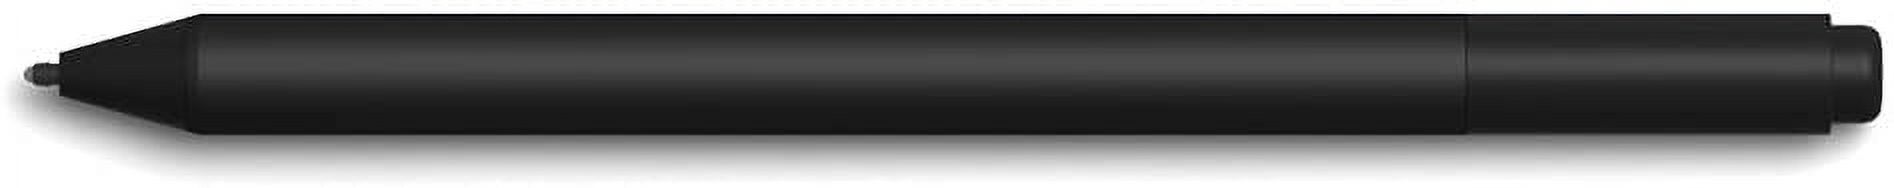 Microsoft Surface Pen, Charcoal, EYU-00001 - image 4 of 4